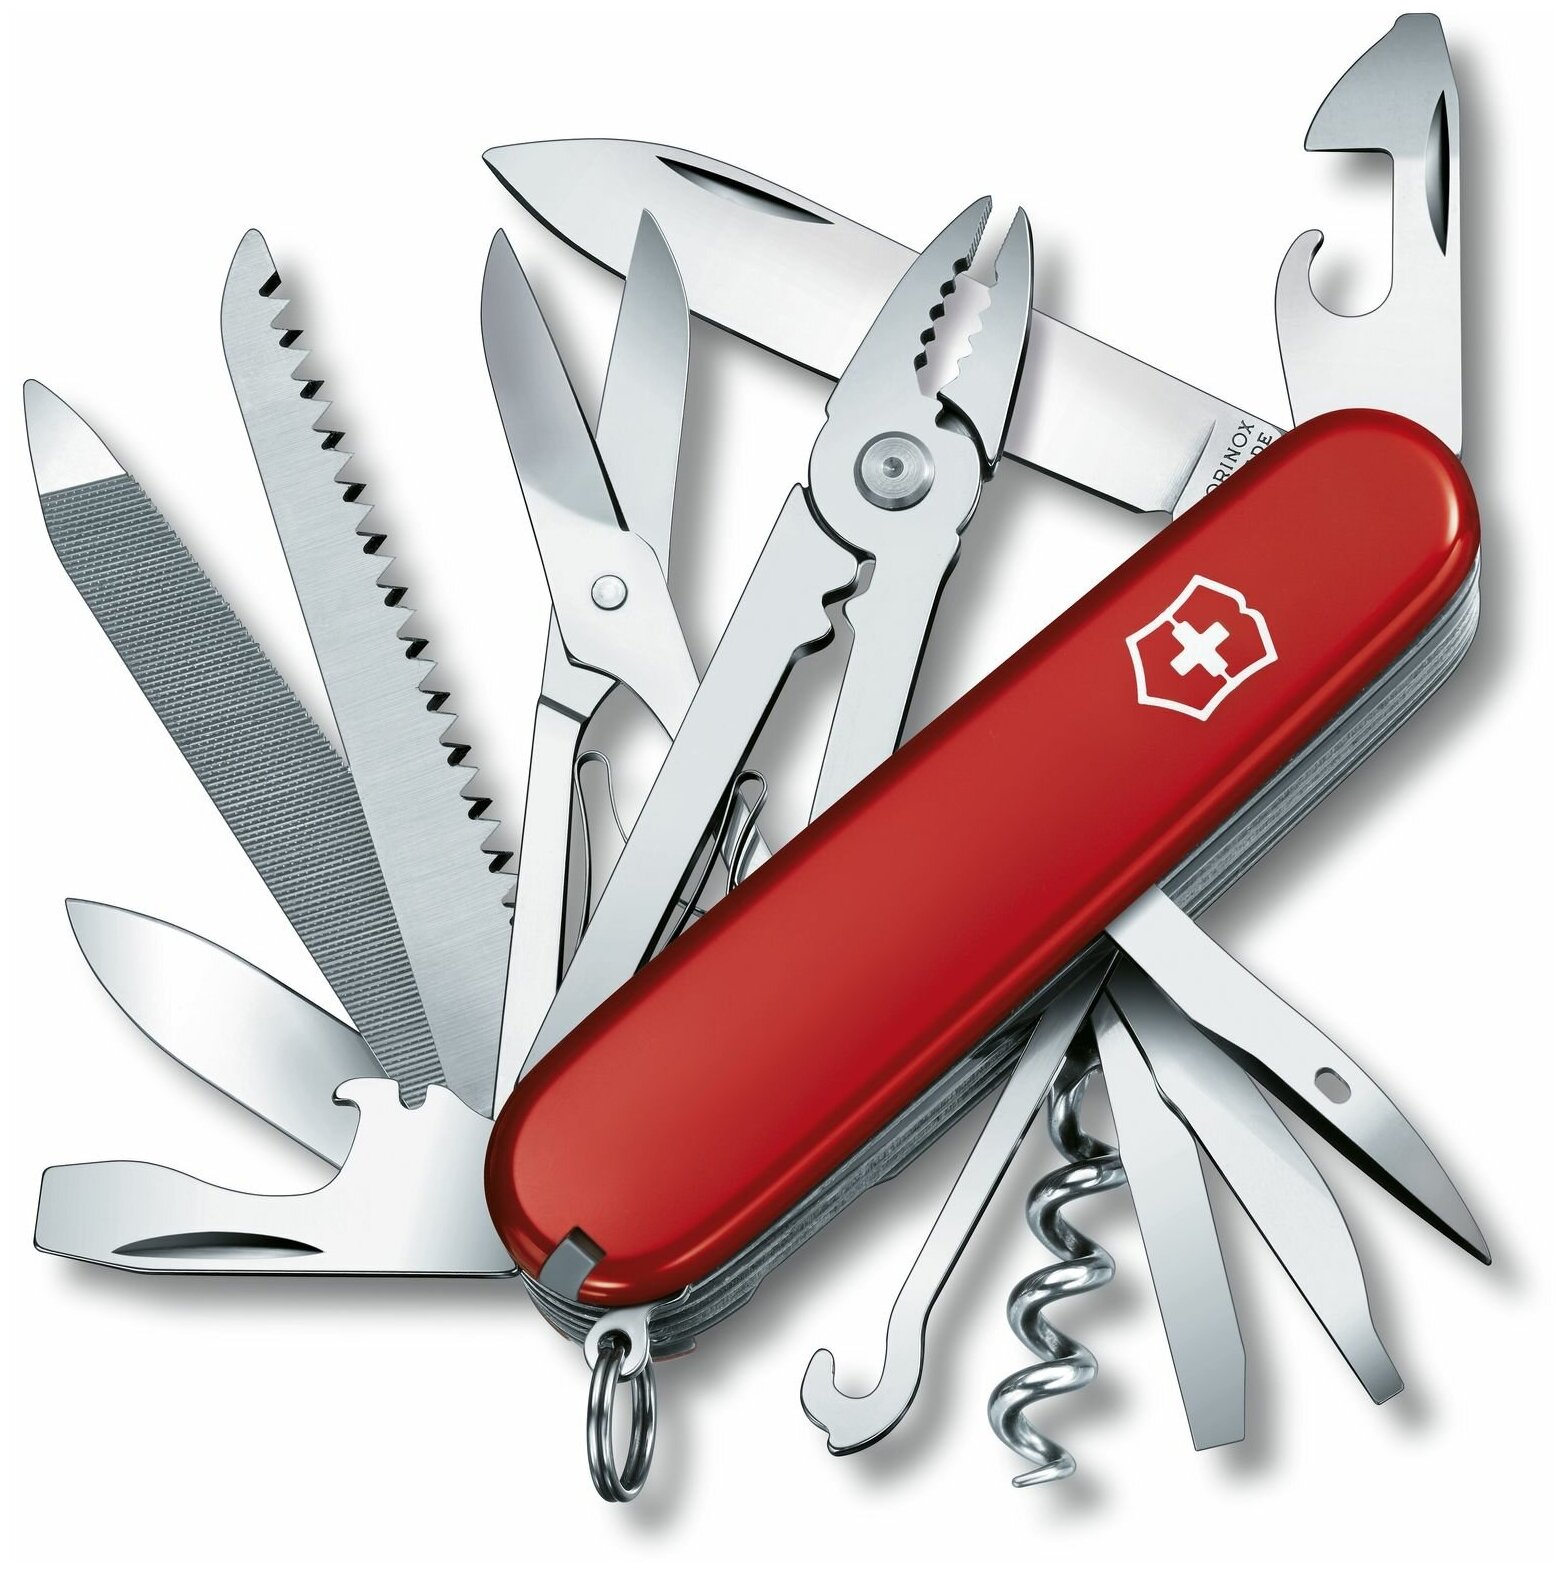 Нож Victorinox Handyman красный (1.3773)